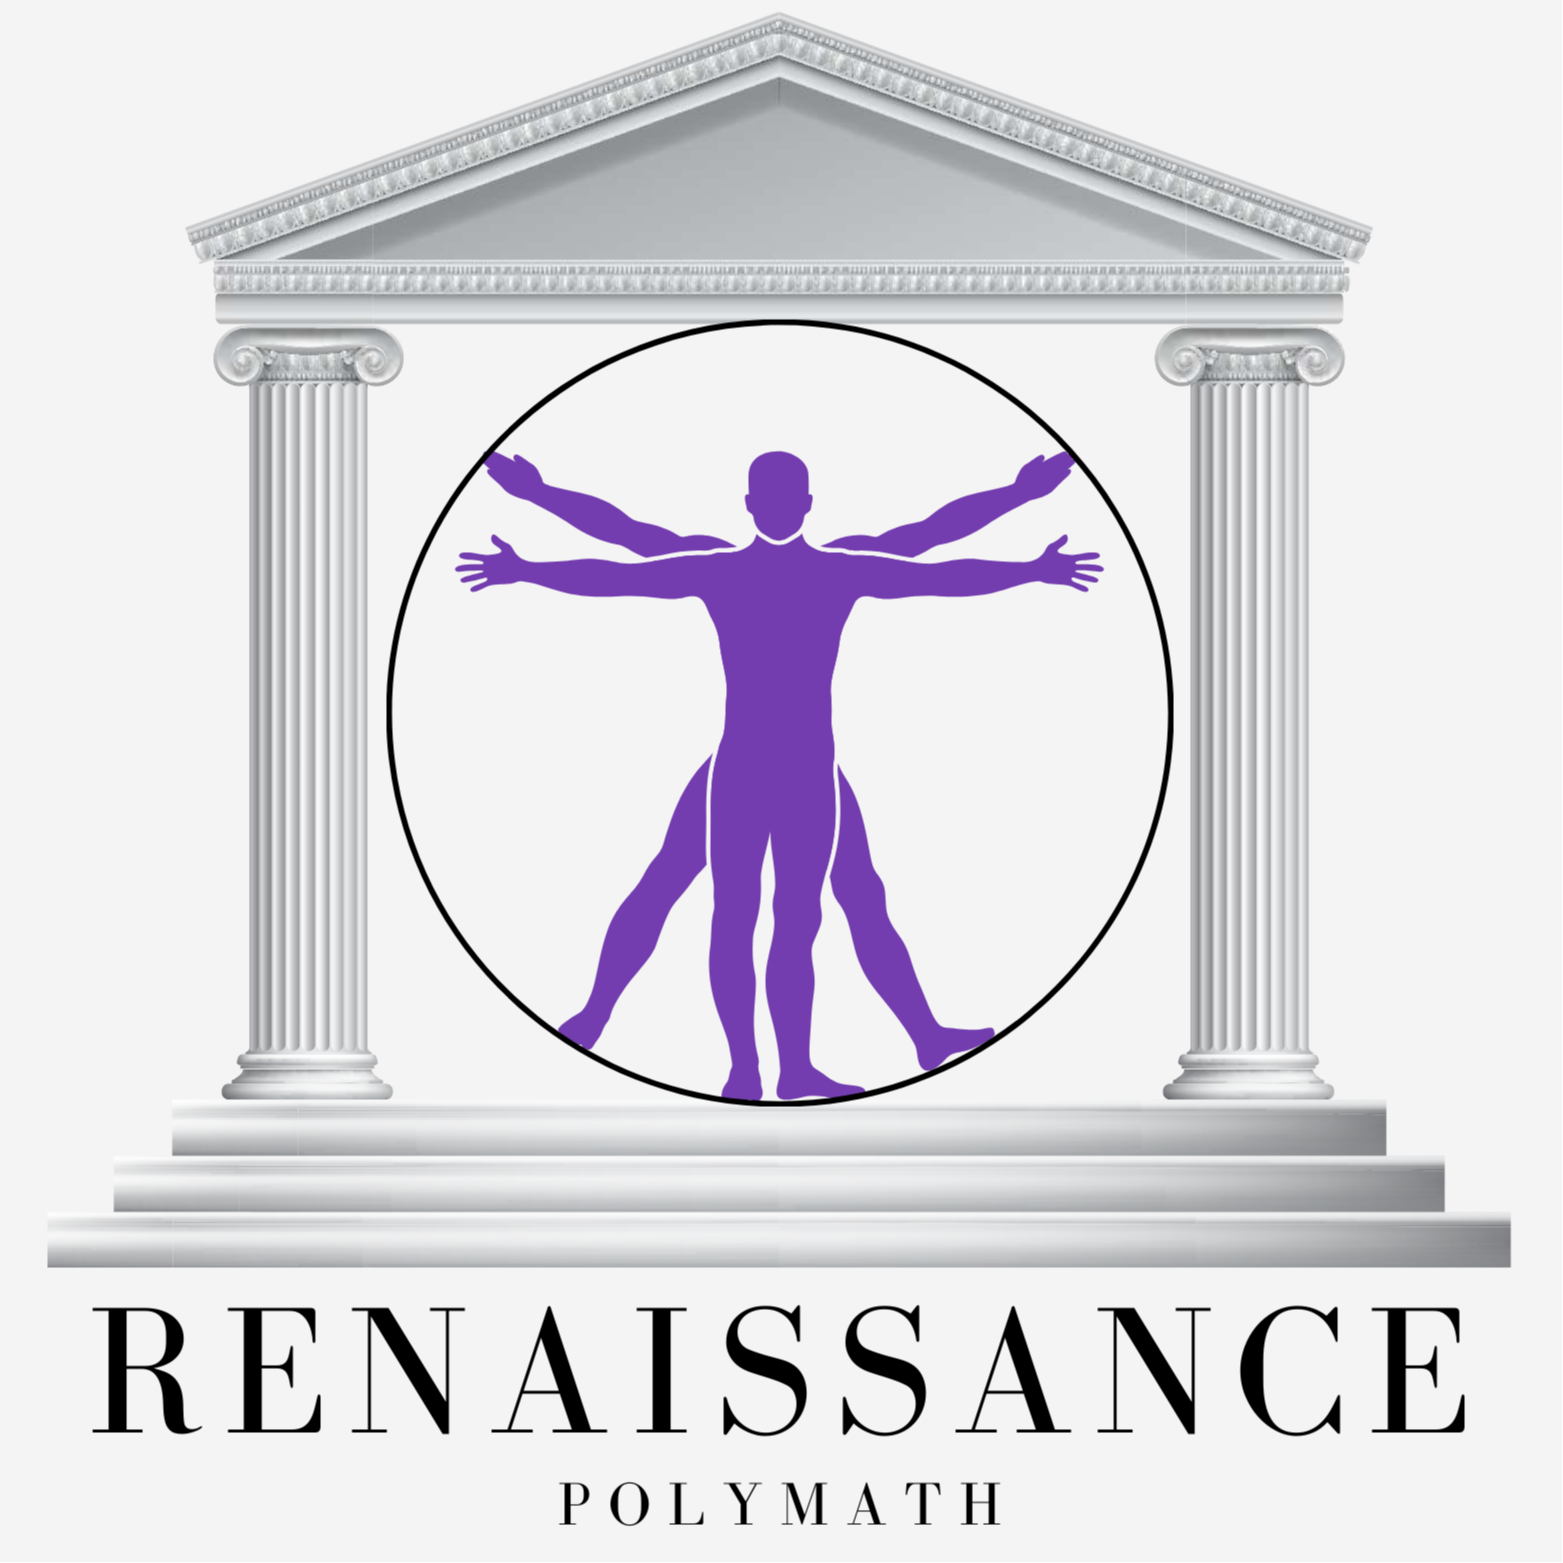 The Renaissance Polymath